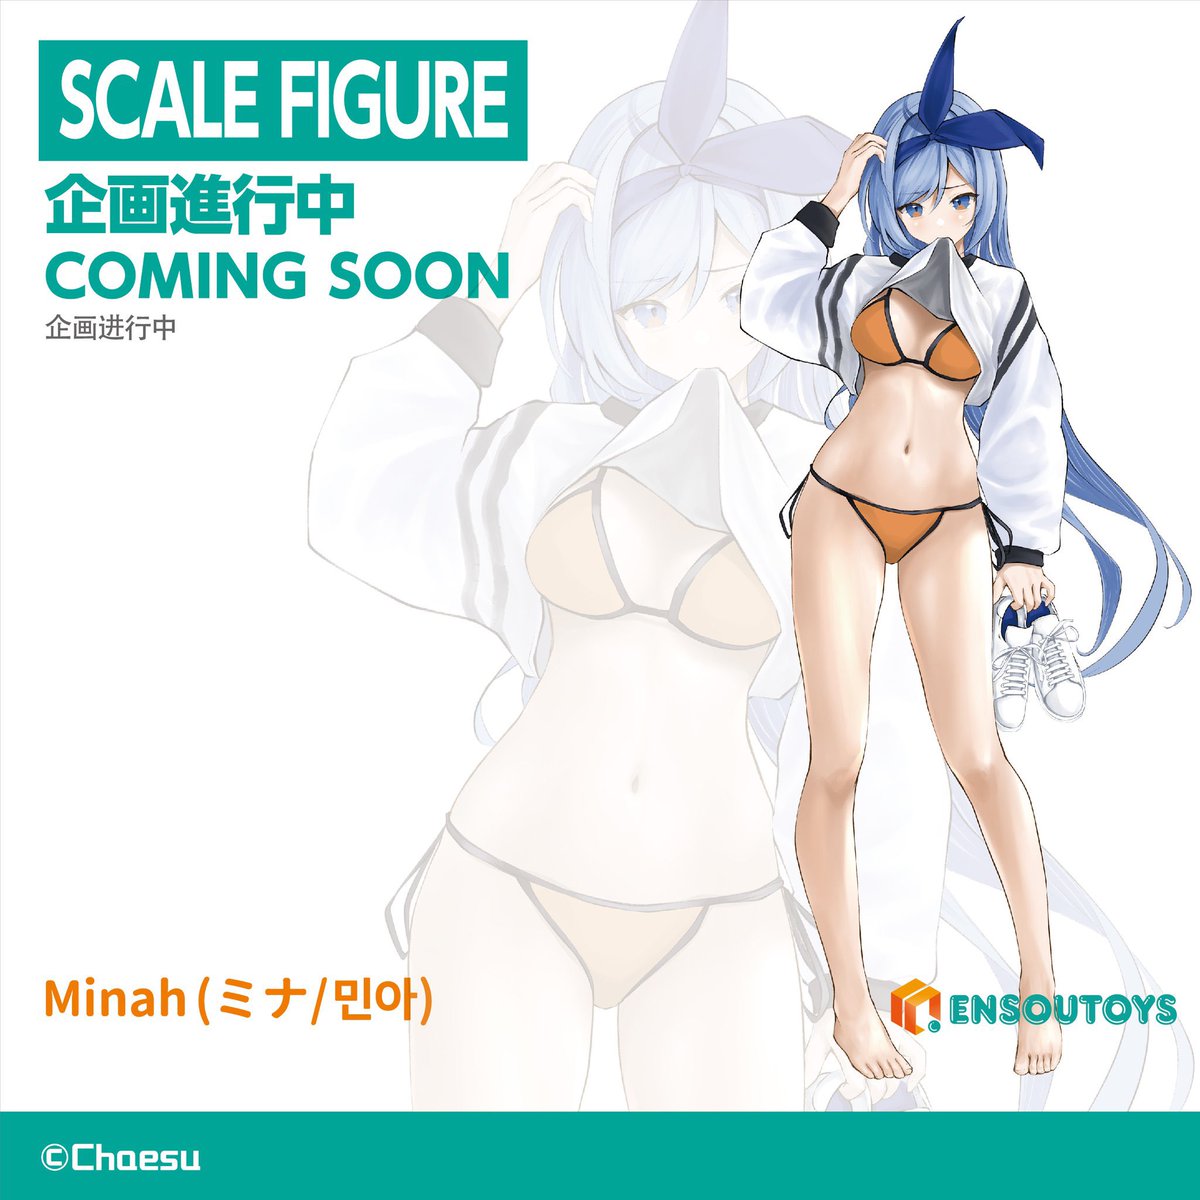 Minah by ENSOUTOYS coming soon!

#AnimeFigure #AnimeFigures #Anime #Manga